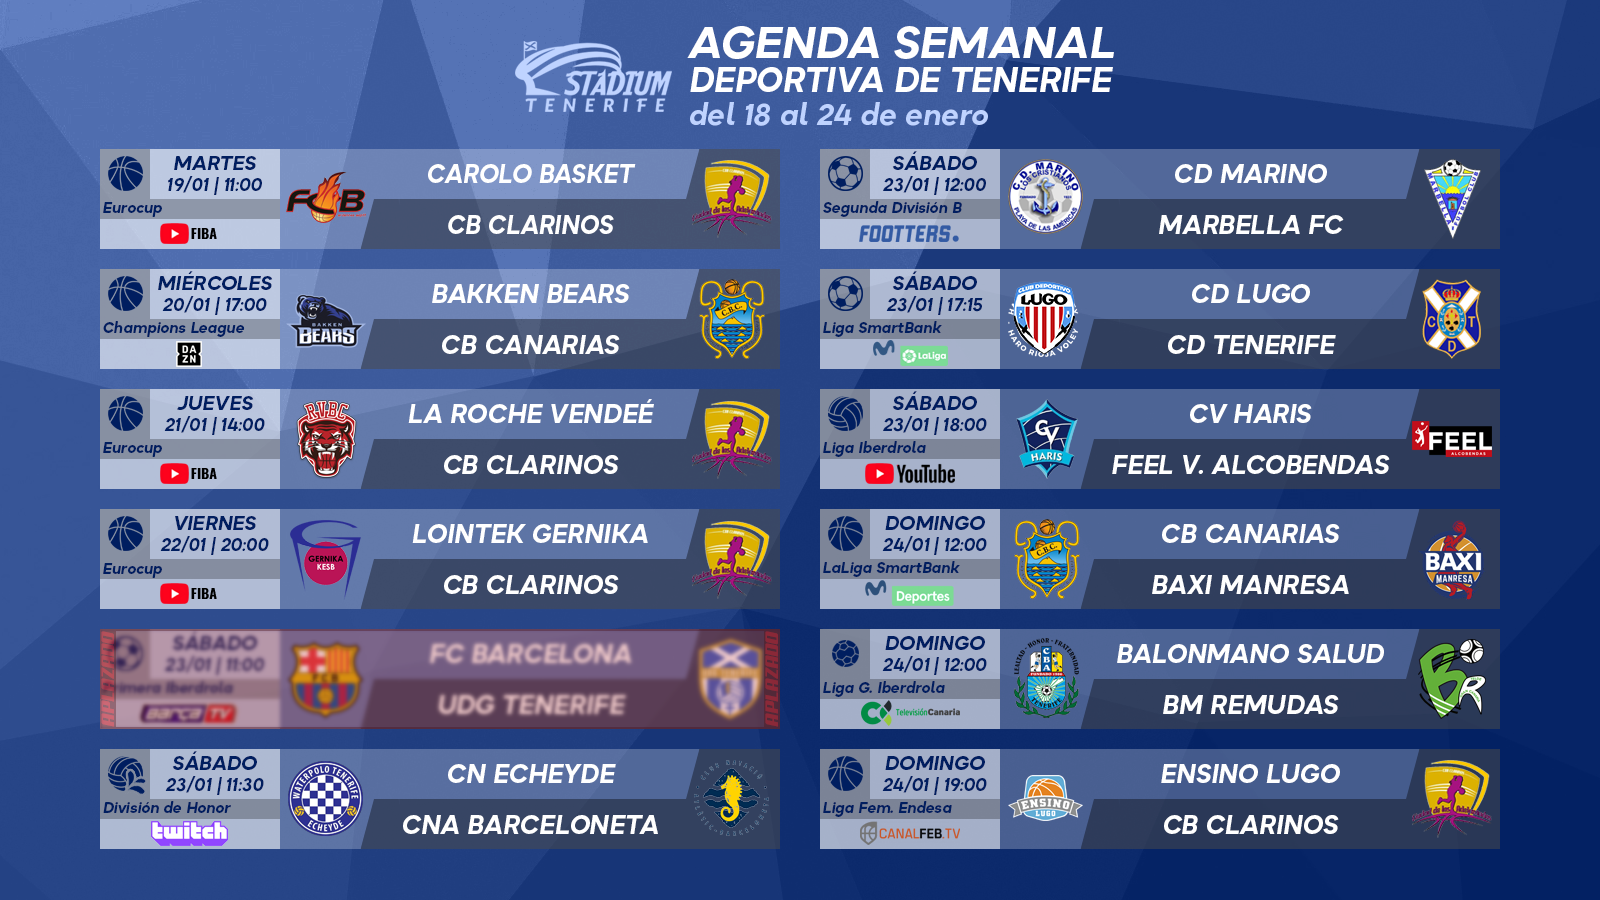 Agenda Semanal Deportiva de Tenerife (18 al 24 de enero)